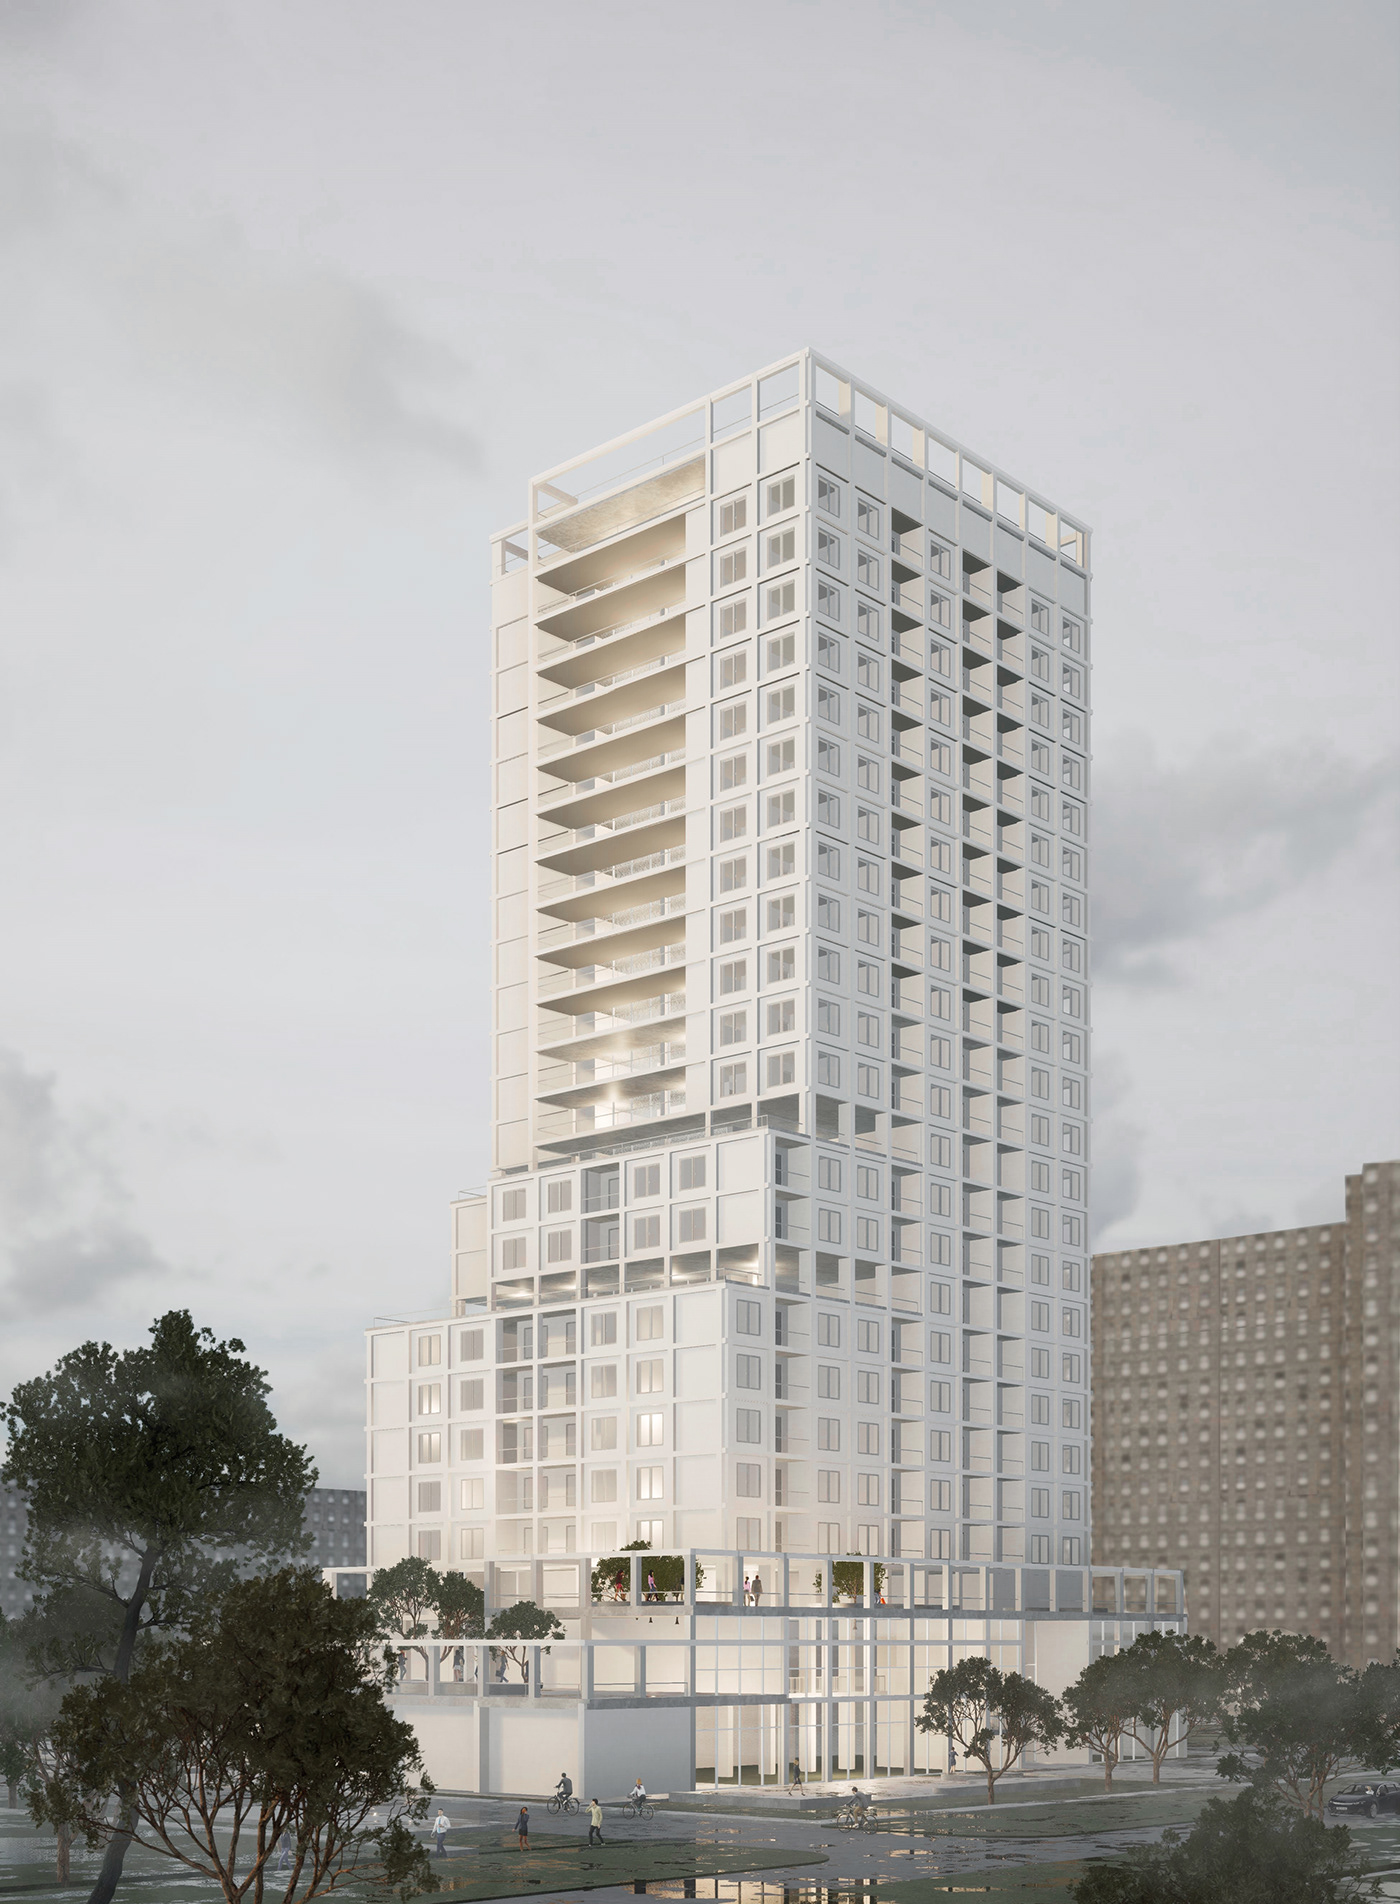 HIgh-Rise residential drawings Elevations floor plans Master Plan Render twinmotion revit resedential building